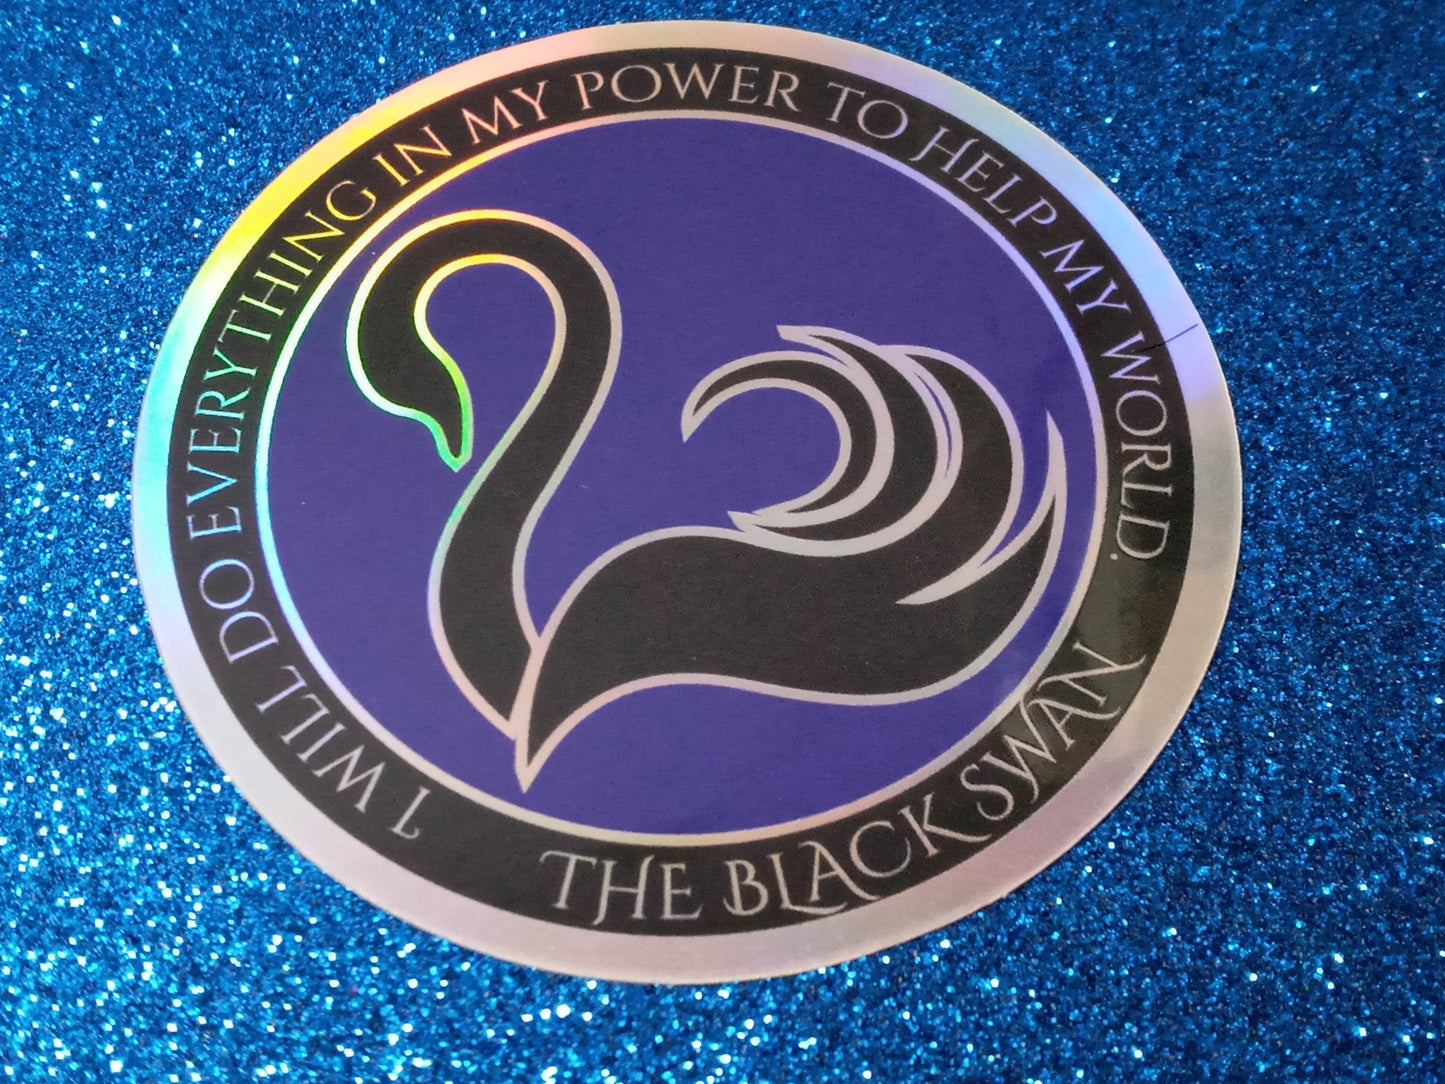 Black Swan inspired bookish holographic vinyl sticker